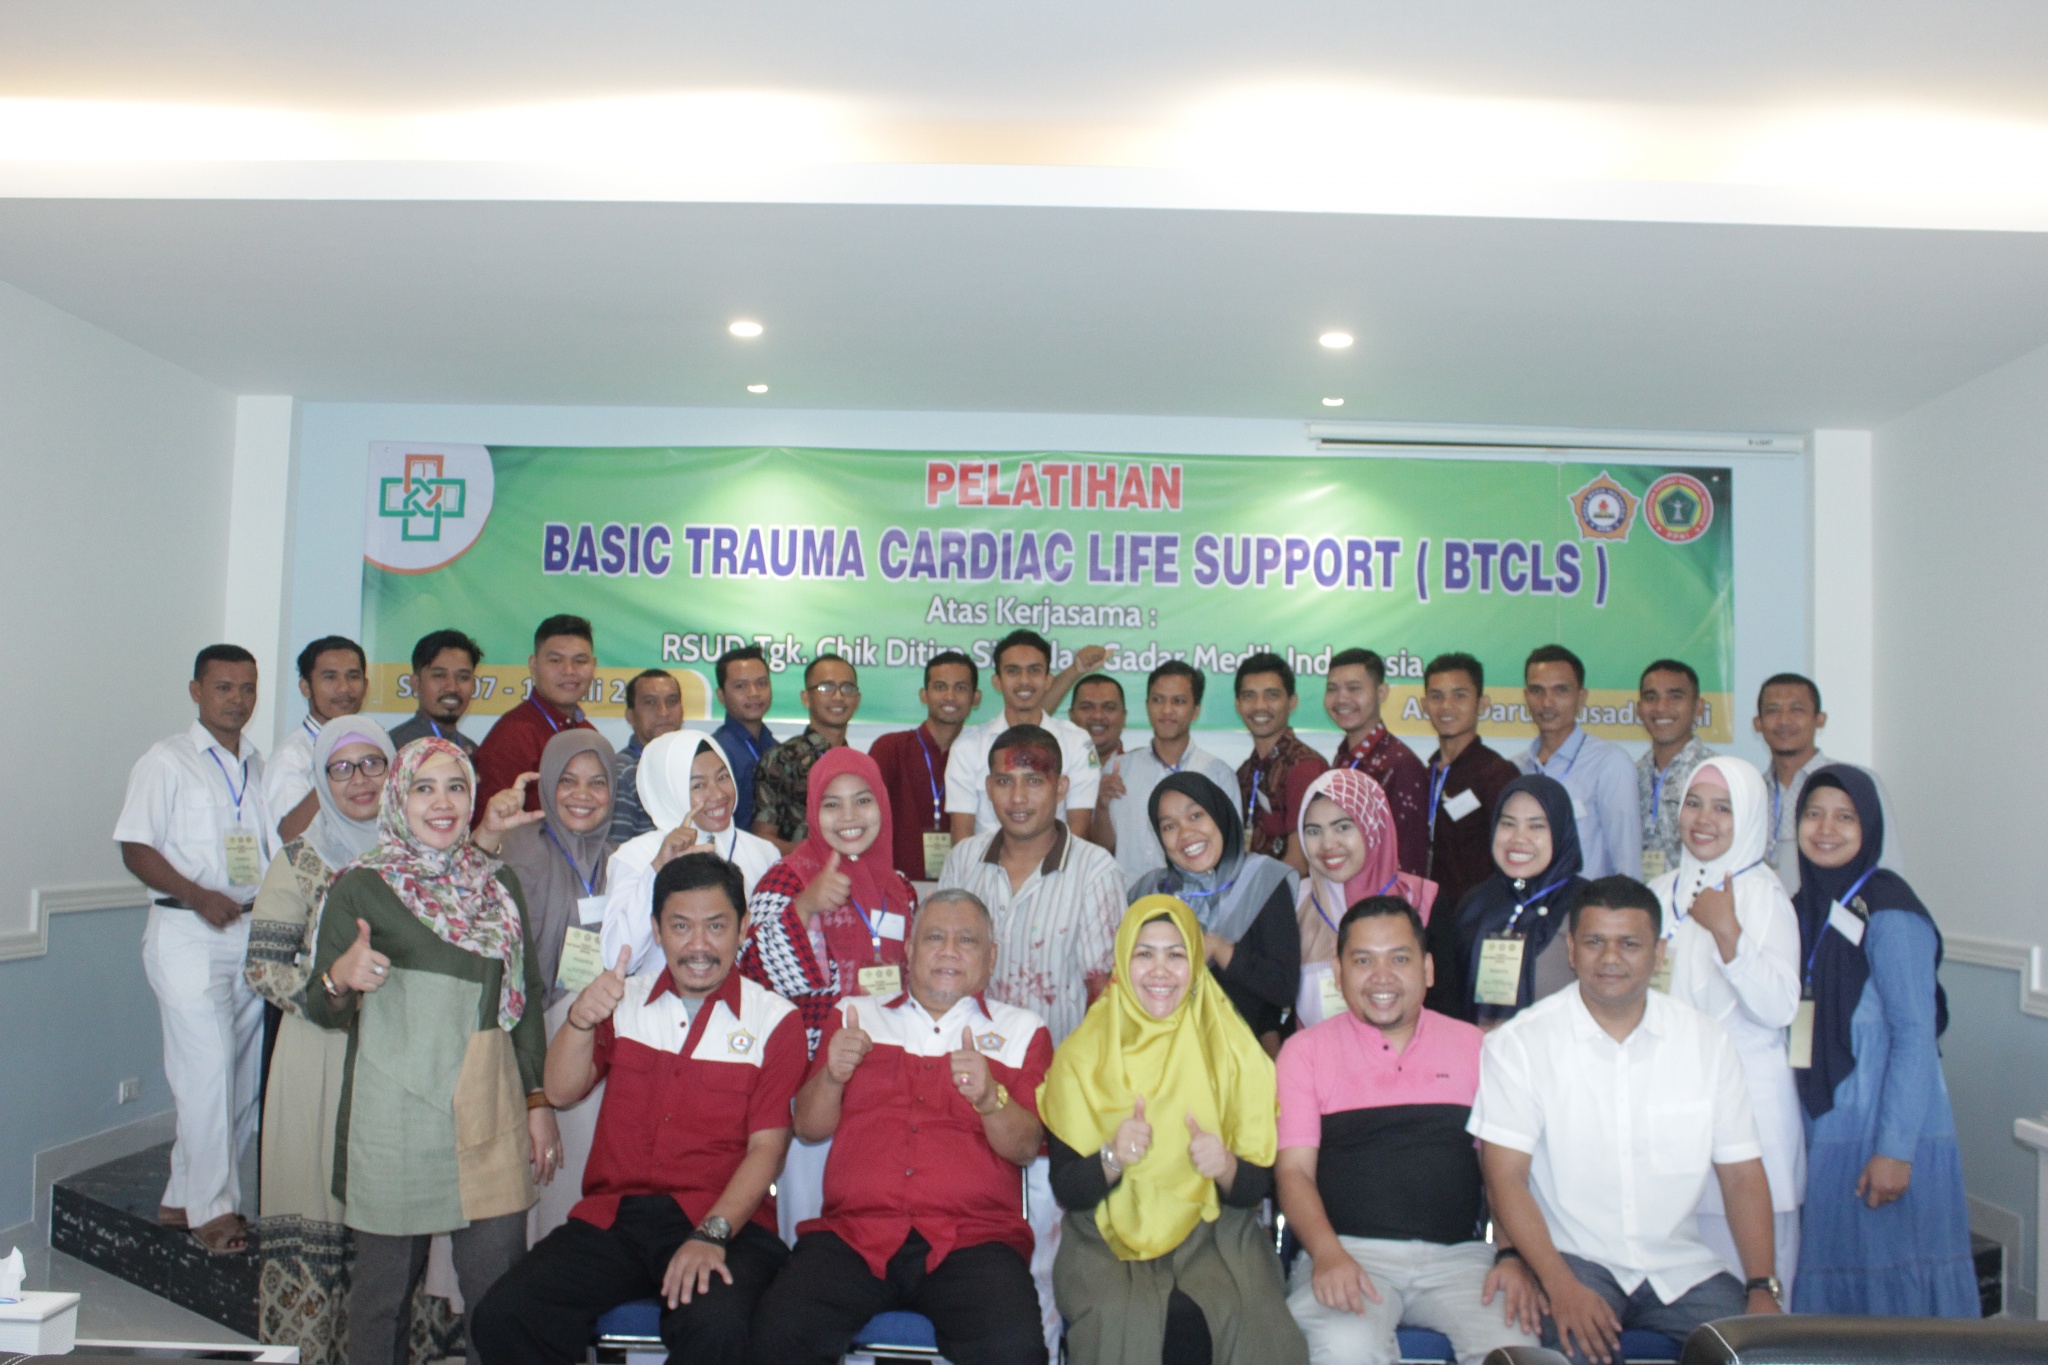 Pelatihan Basic Trauma Cardiac Life Support (BTCLS) di RSUD Tgk Chik Ditiro